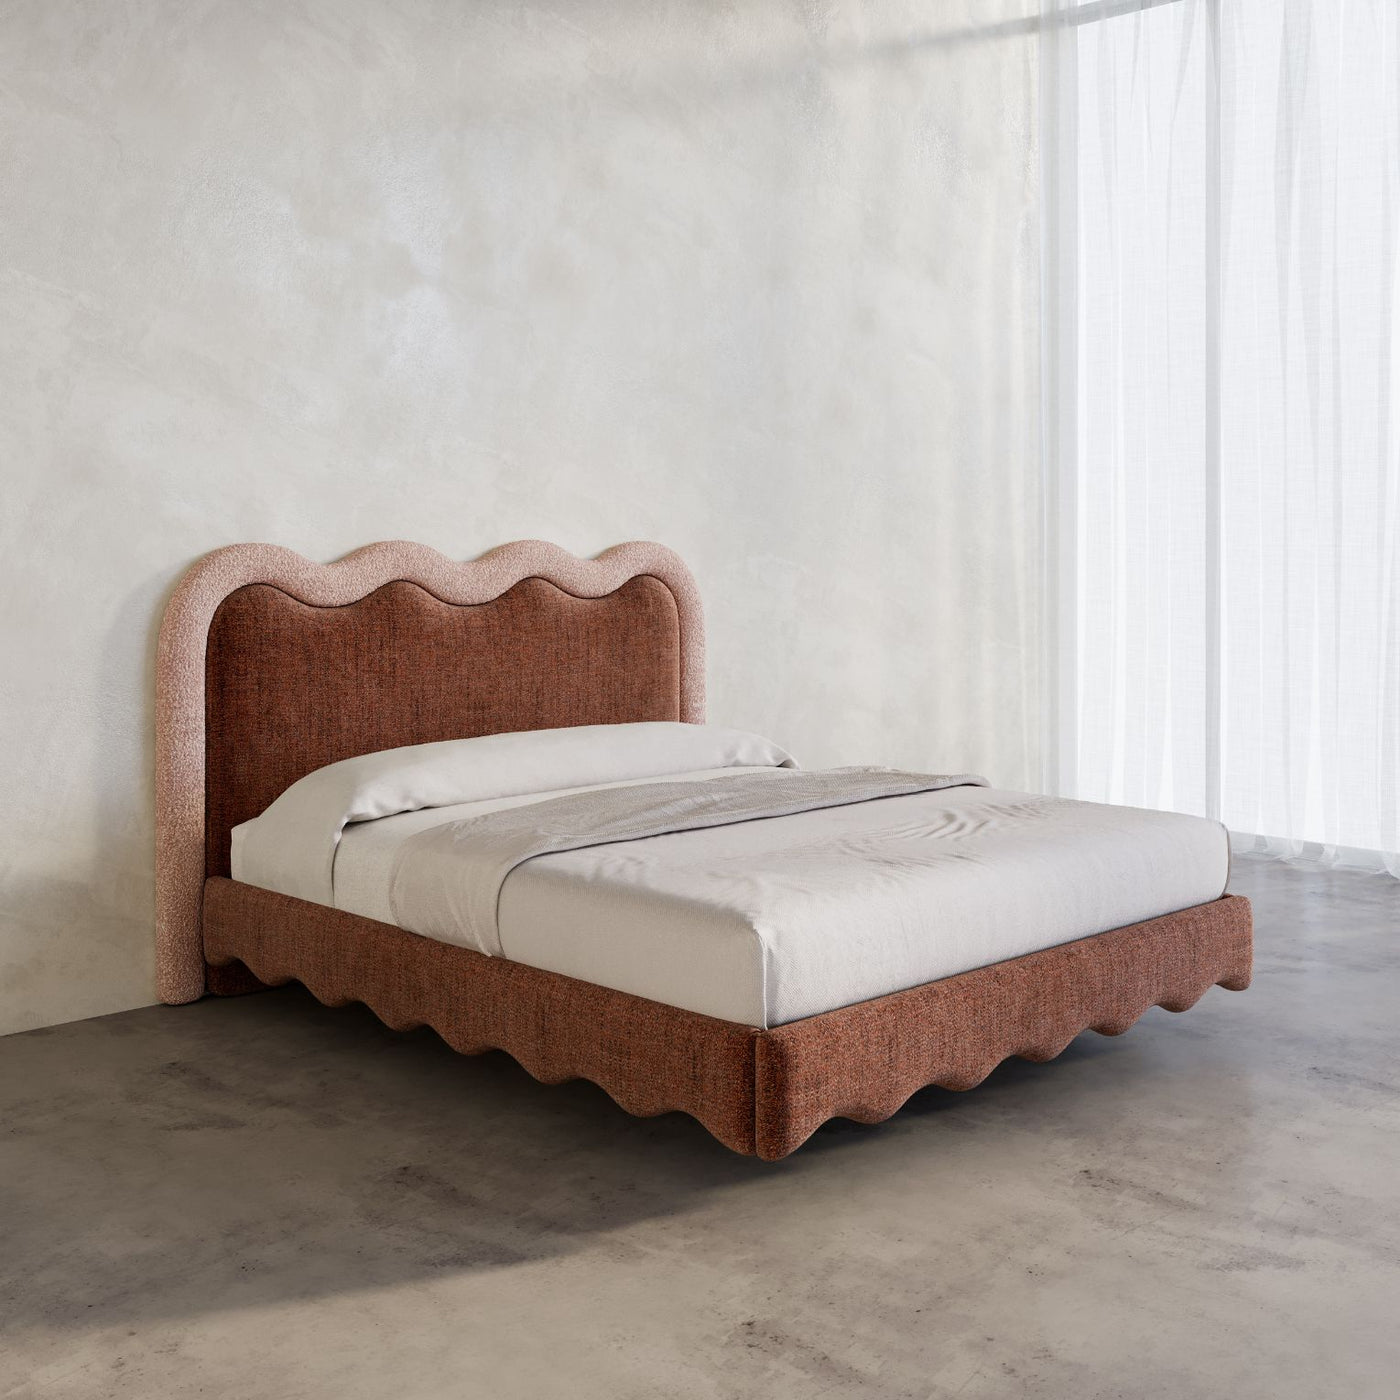 Pink Bondi bed frame with contrast border